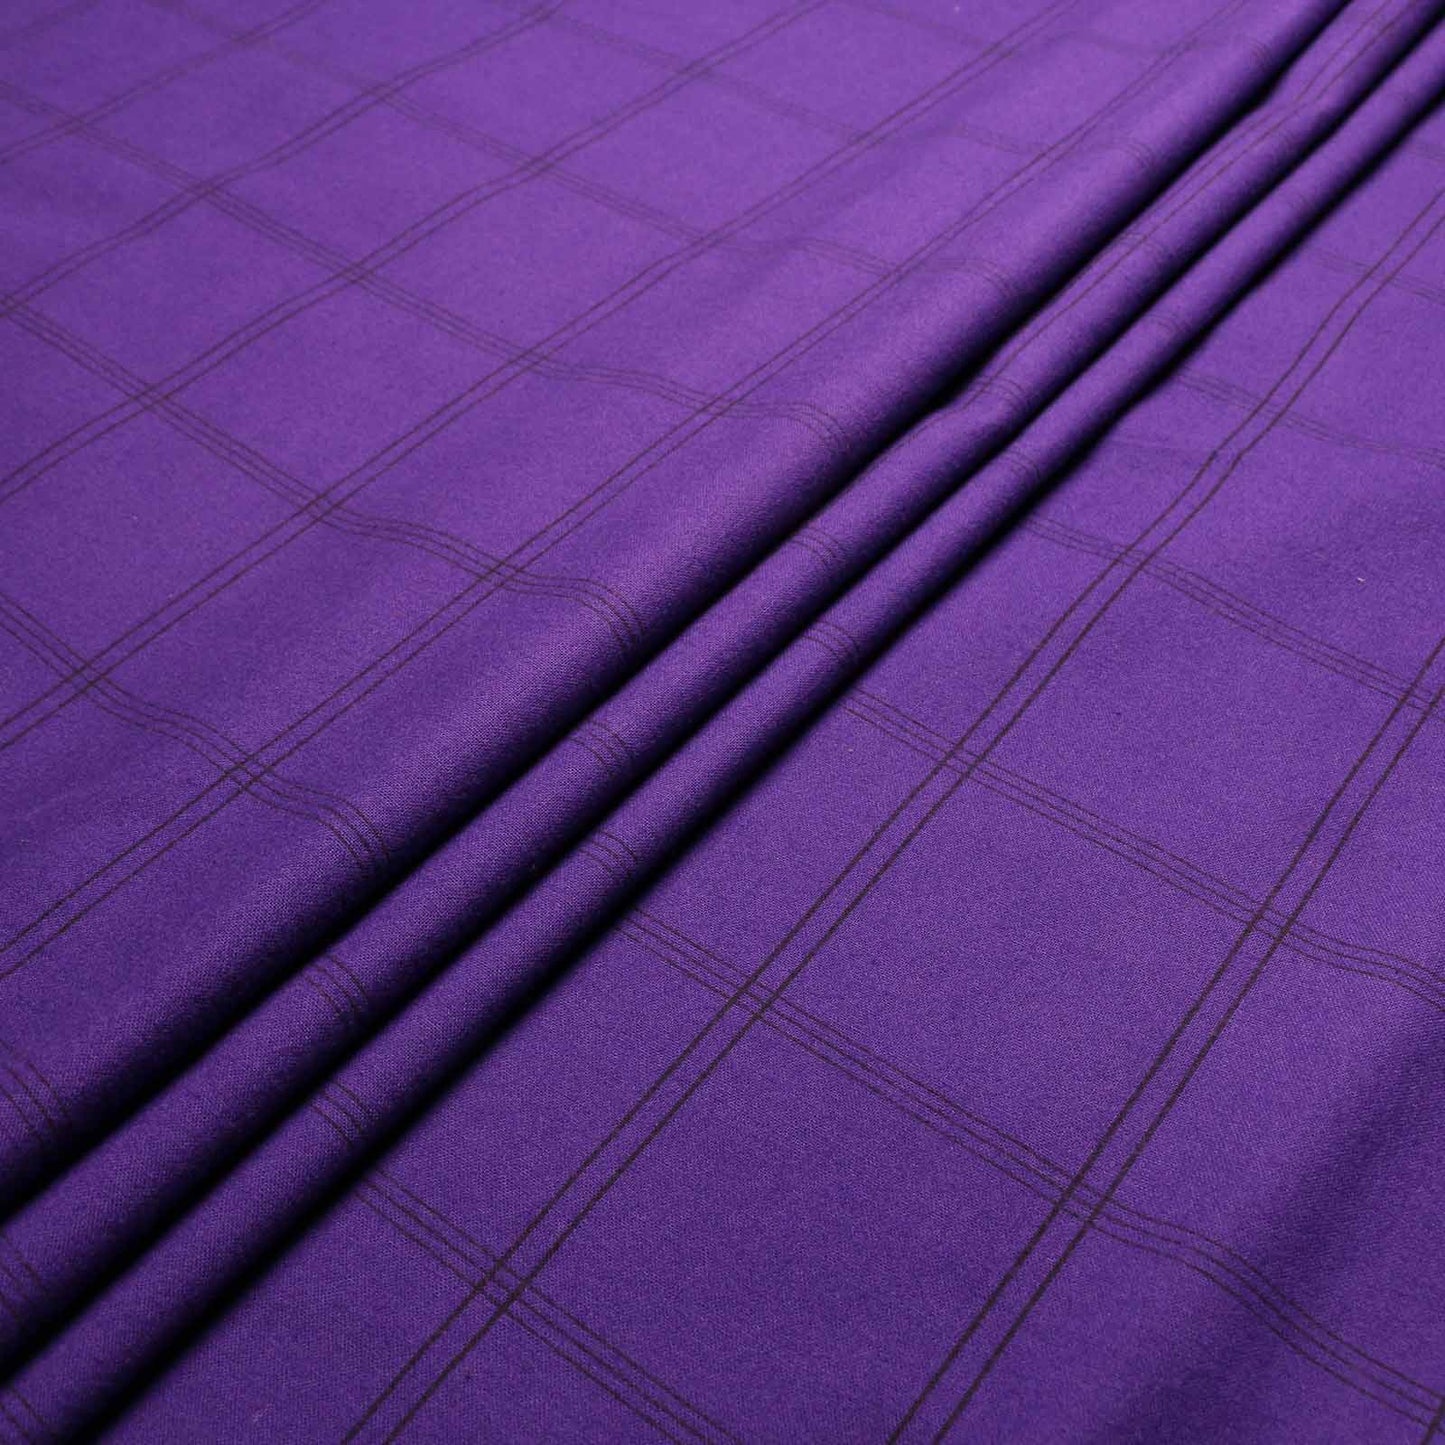 folded purple and black check pattern brushed cotton dressmaking fabric